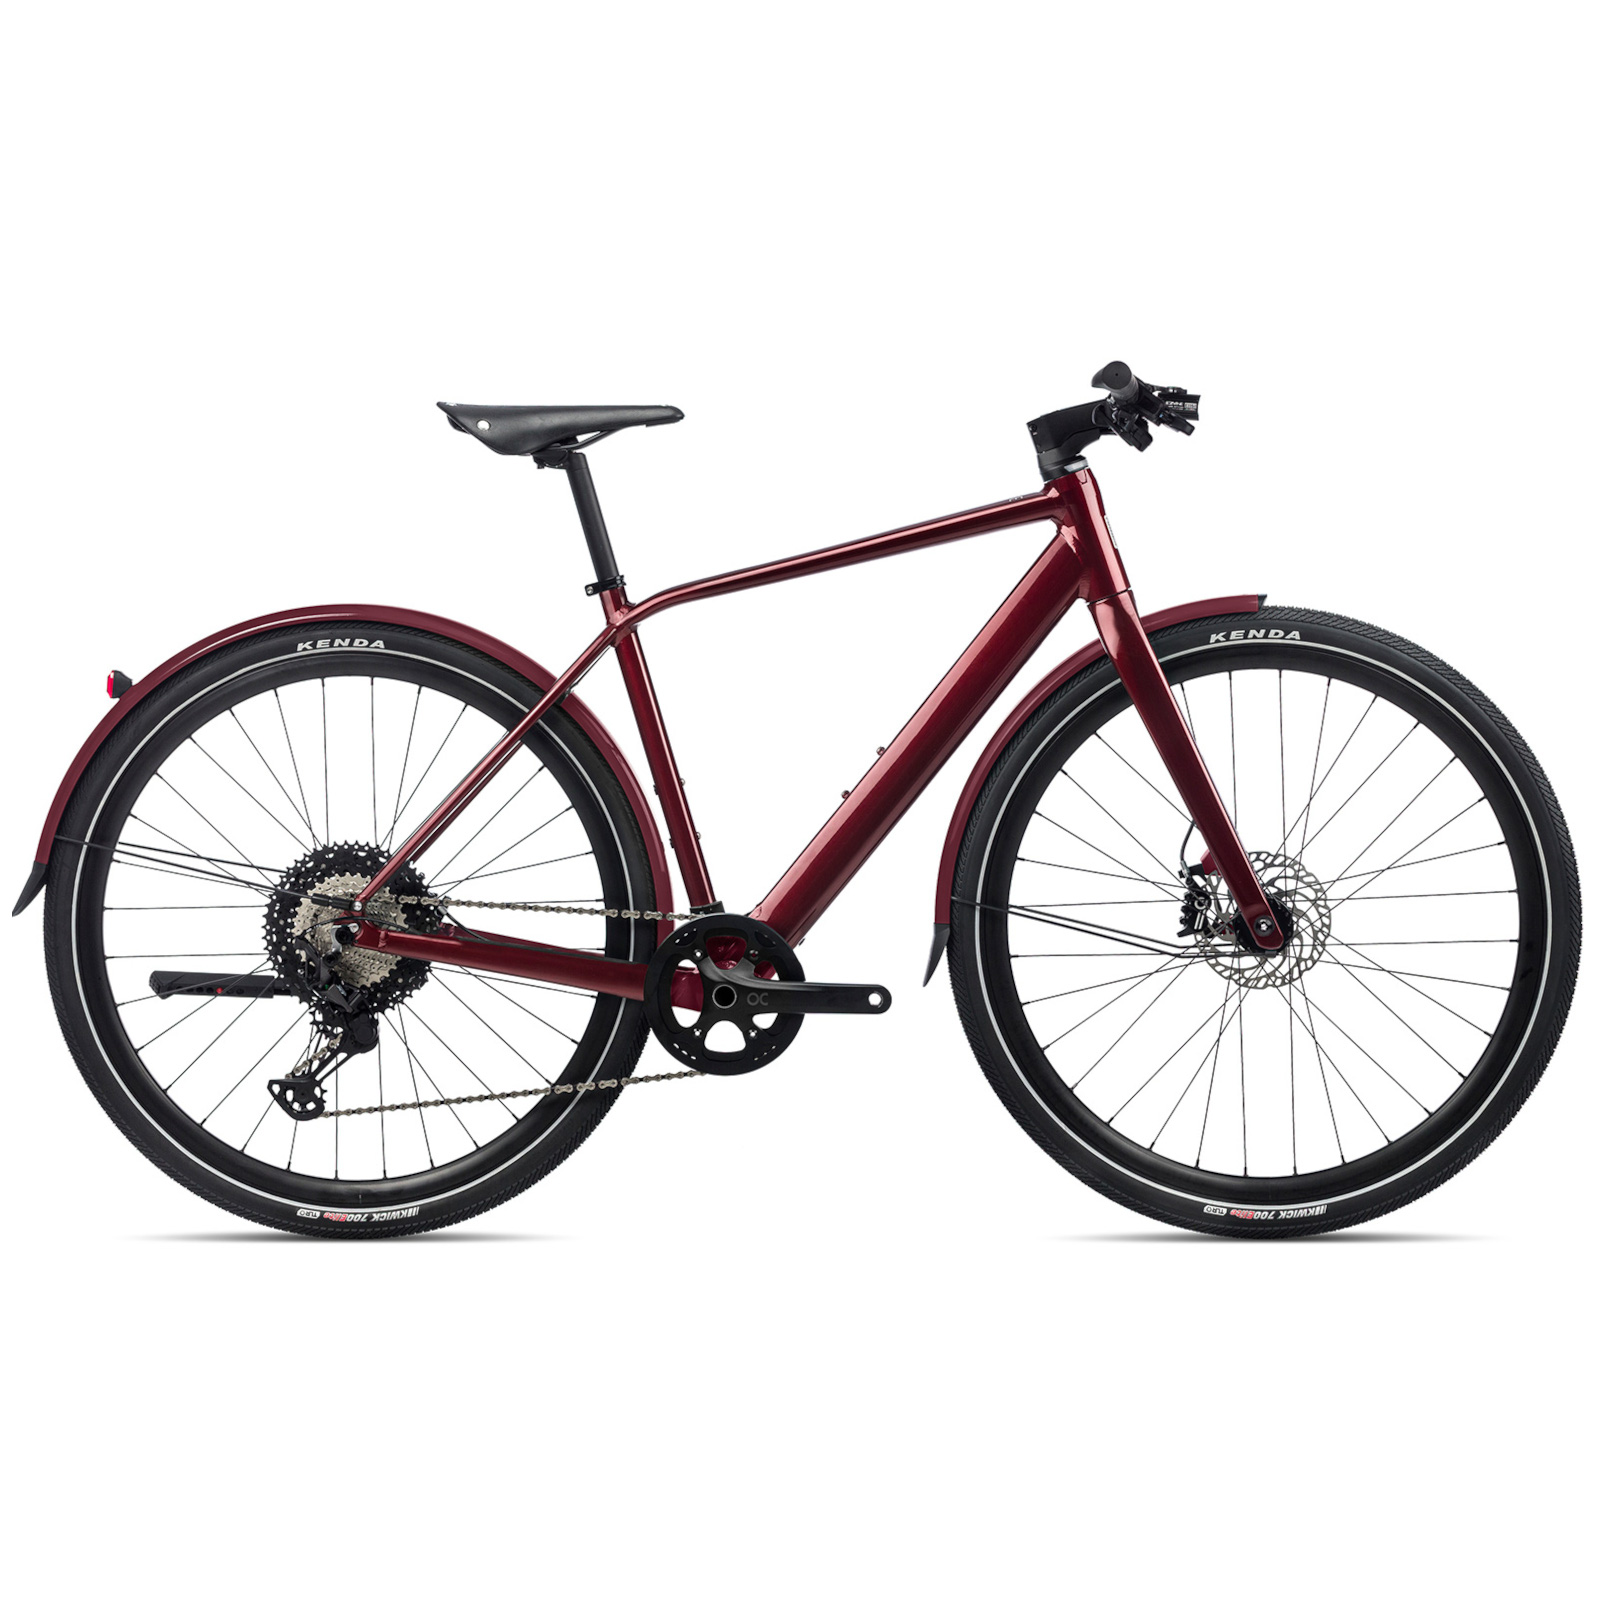 Picture of Orbea Vibe H10 MUD City E-Bike - 2022 - Metallic Dark Red (Gloss)